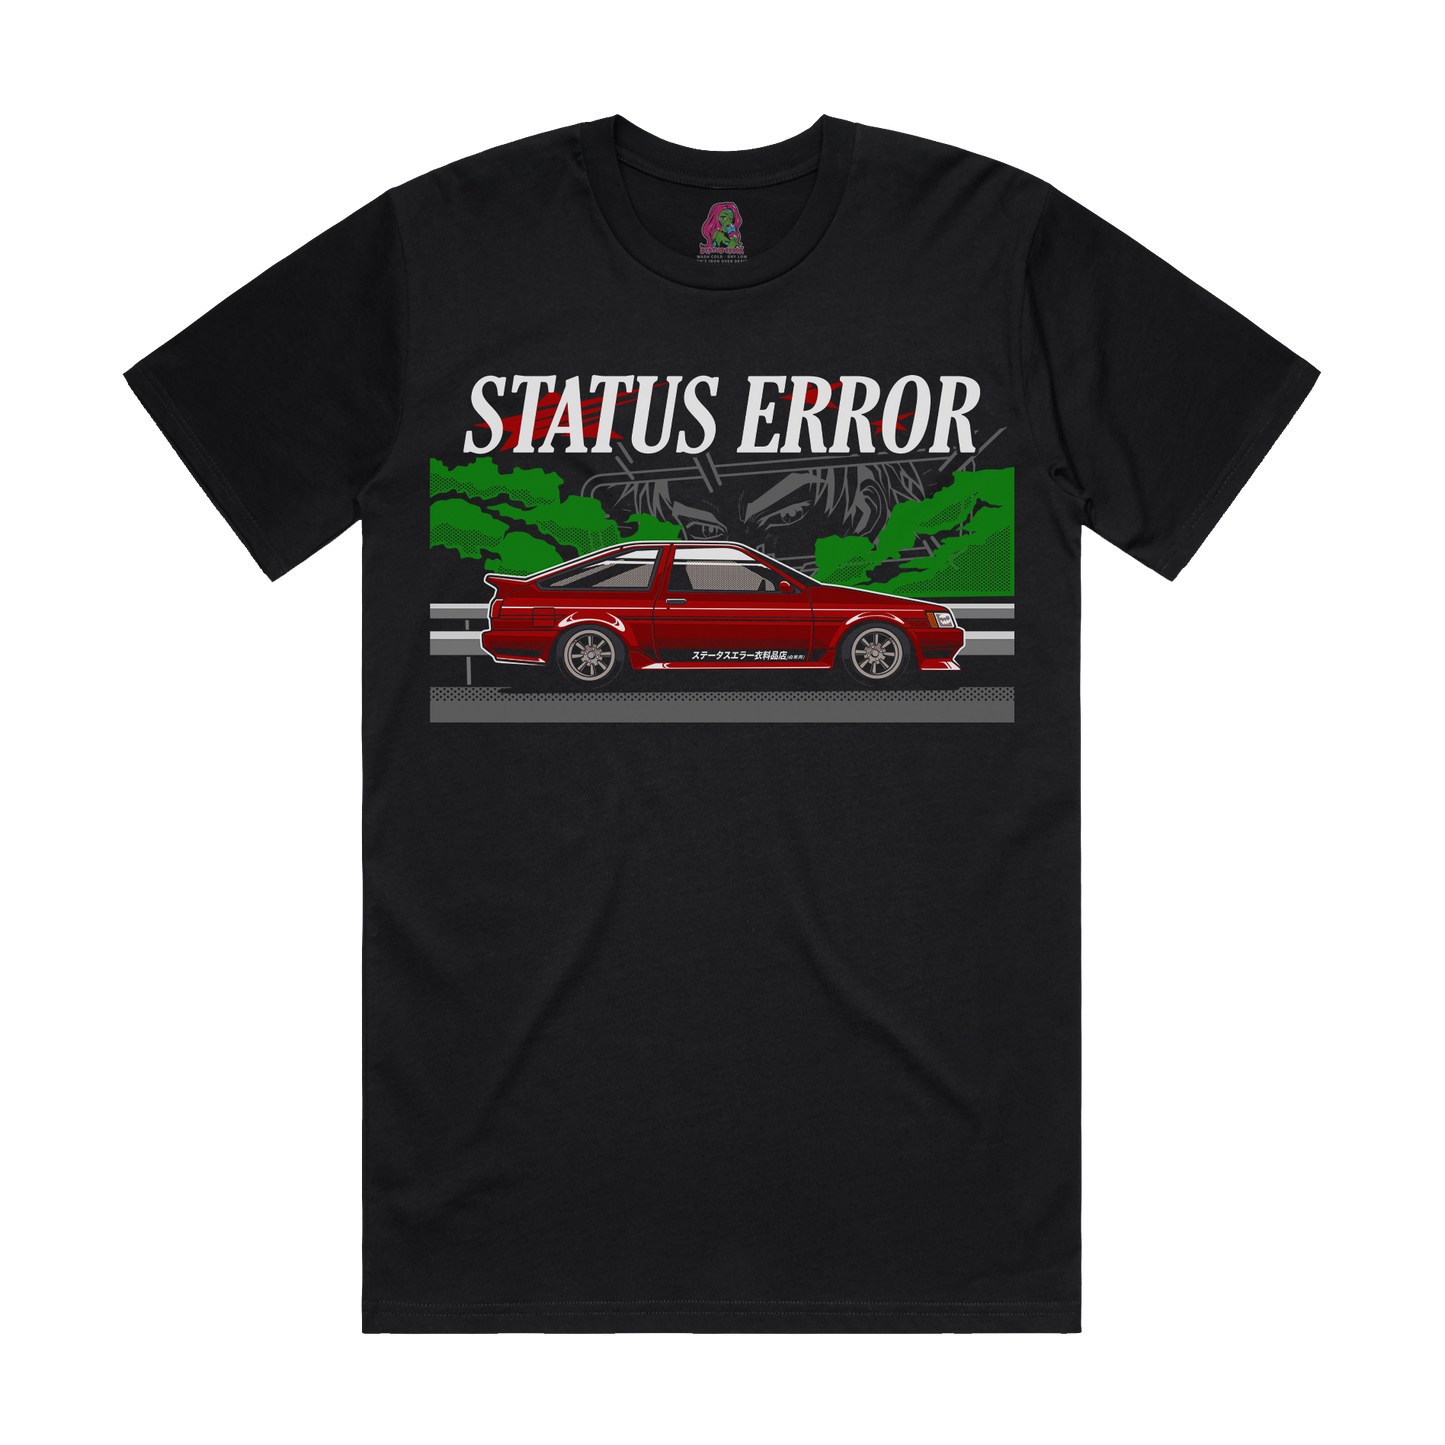 Status Error Clothing Shop T-Shirt